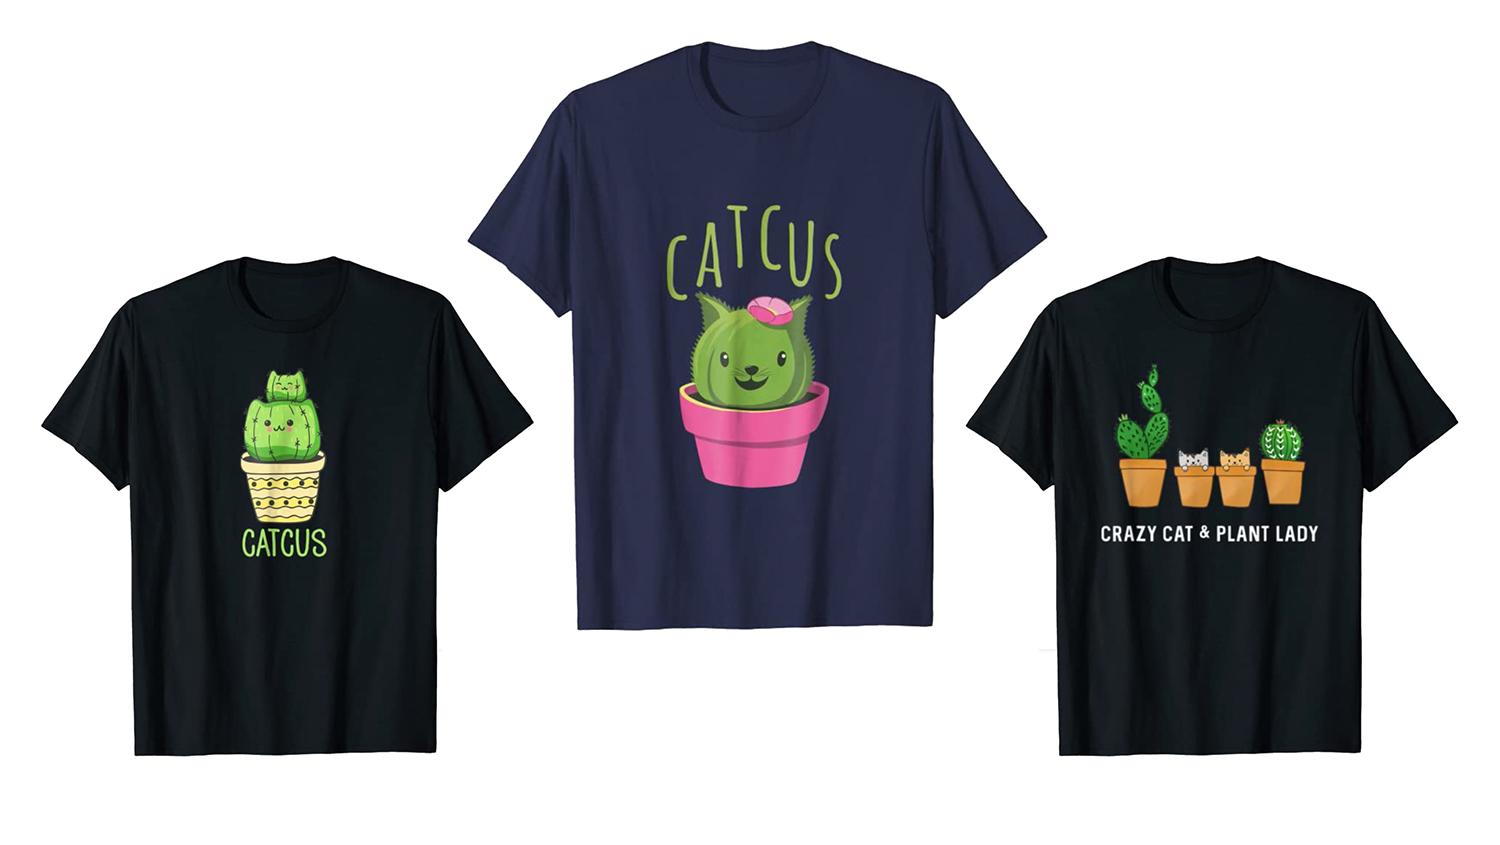 Cats & Cacti! • hauspanther